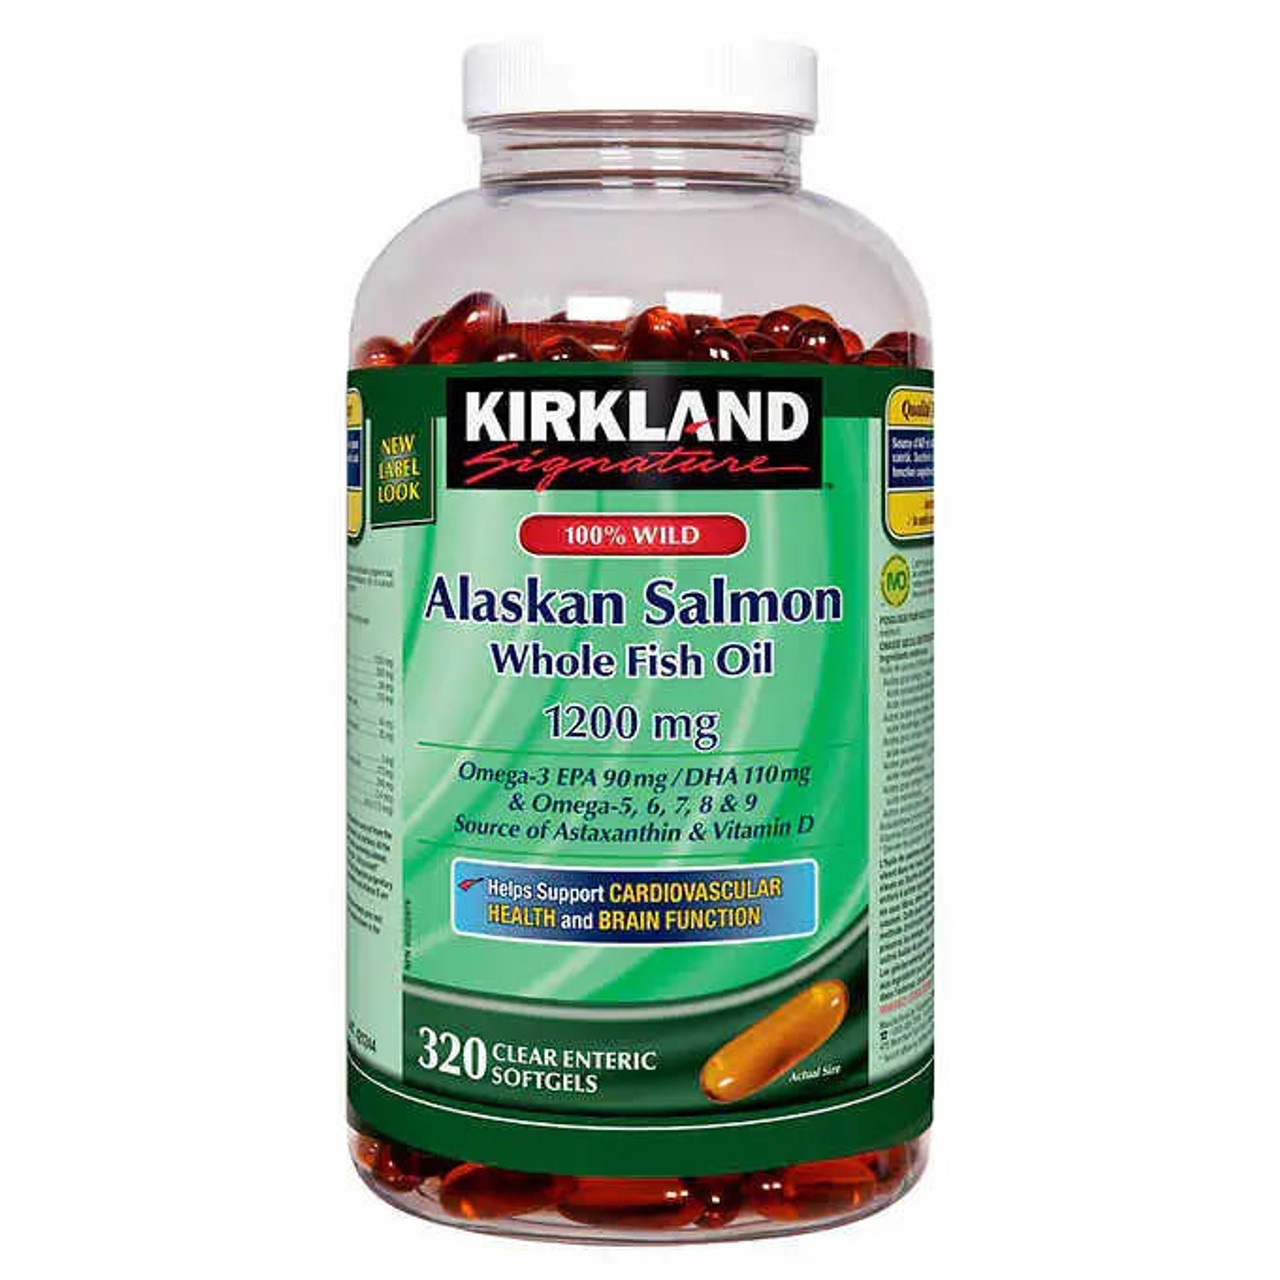  Kirkland Signature 100% Wild Alaskan Salmon Whole Fish Oil, 320 Softgels | Pure Omega-3 from Wild Alaskan Salmon 